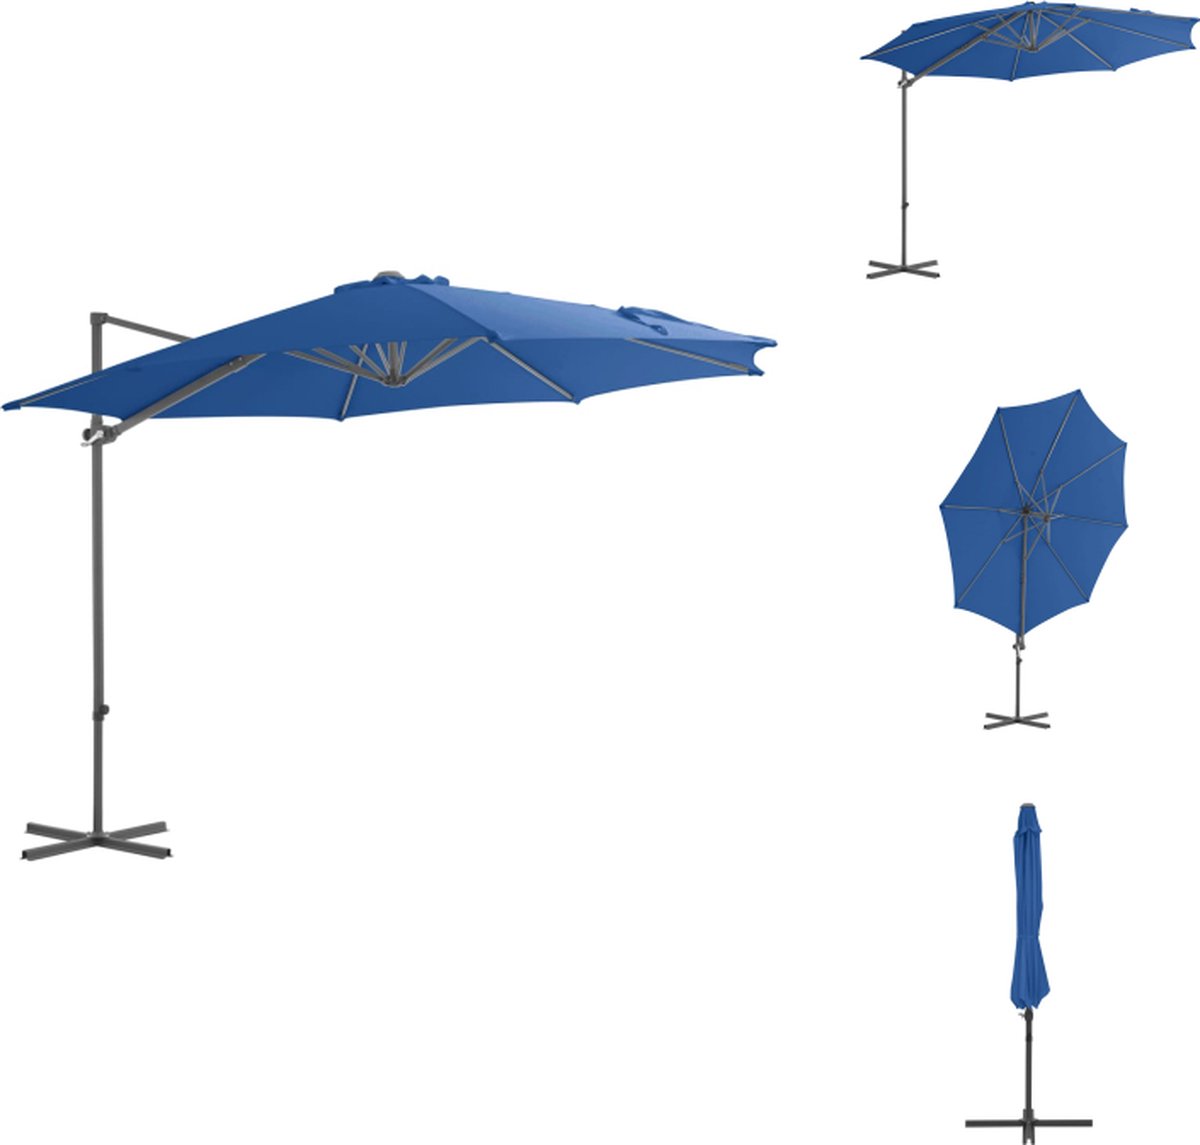 VidaXL Hangende Parasol Azuurblauw 300 x 255 cm UV-beschermend polyester Parasol